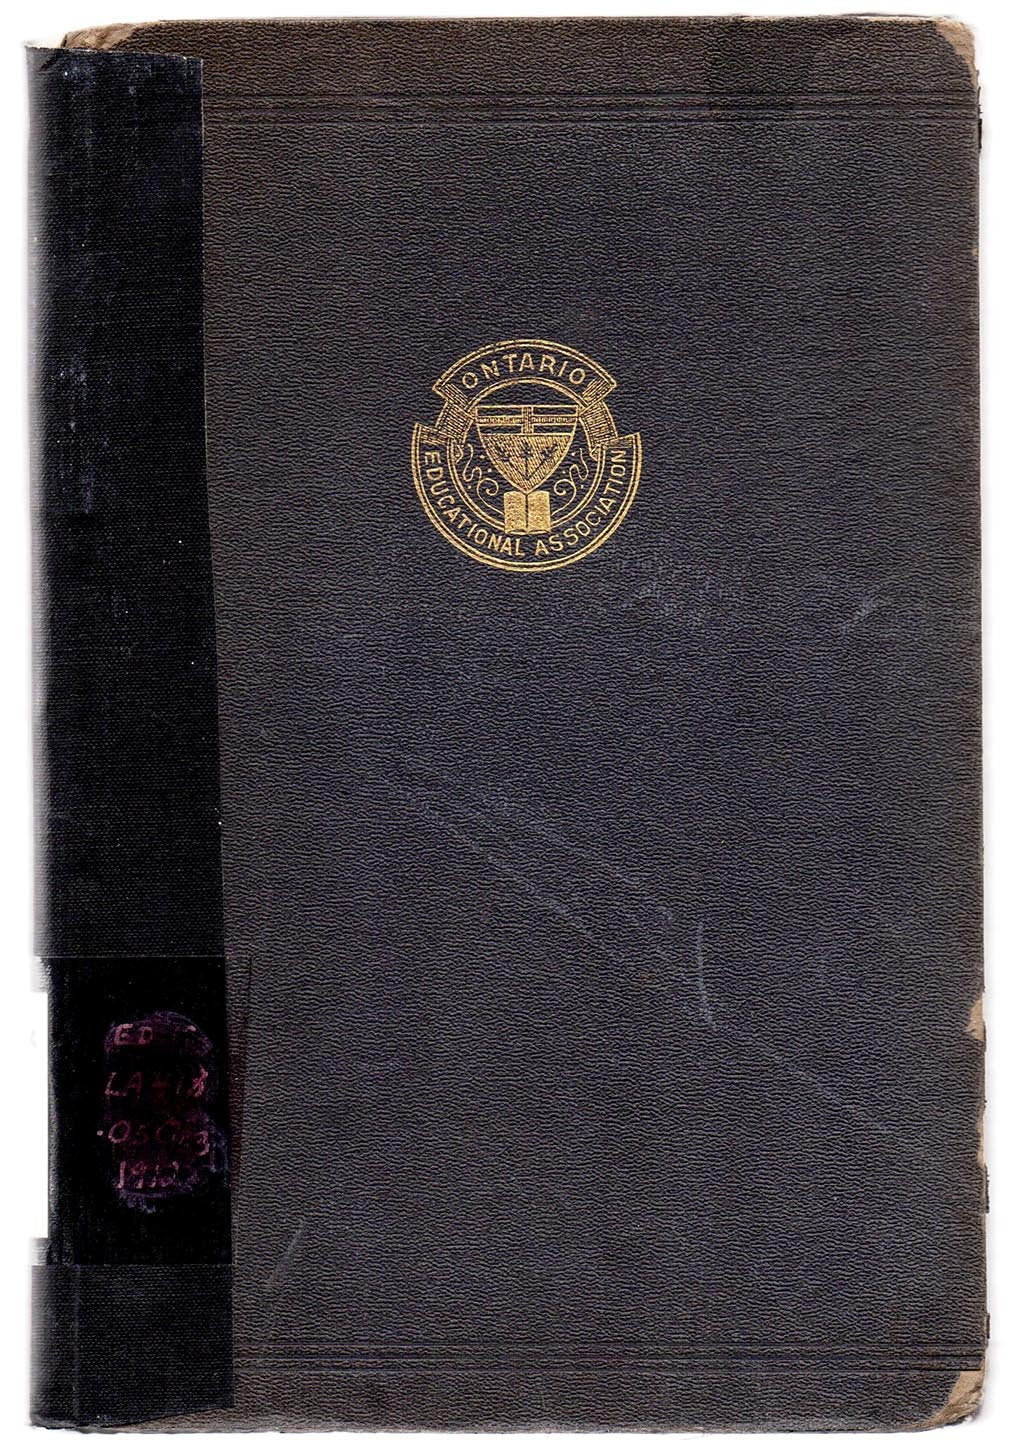 Souvenir Volume, Ontario Educational Association, Jubilee Banquet, Convocation Hall, University of Toronto, April 18, 1911